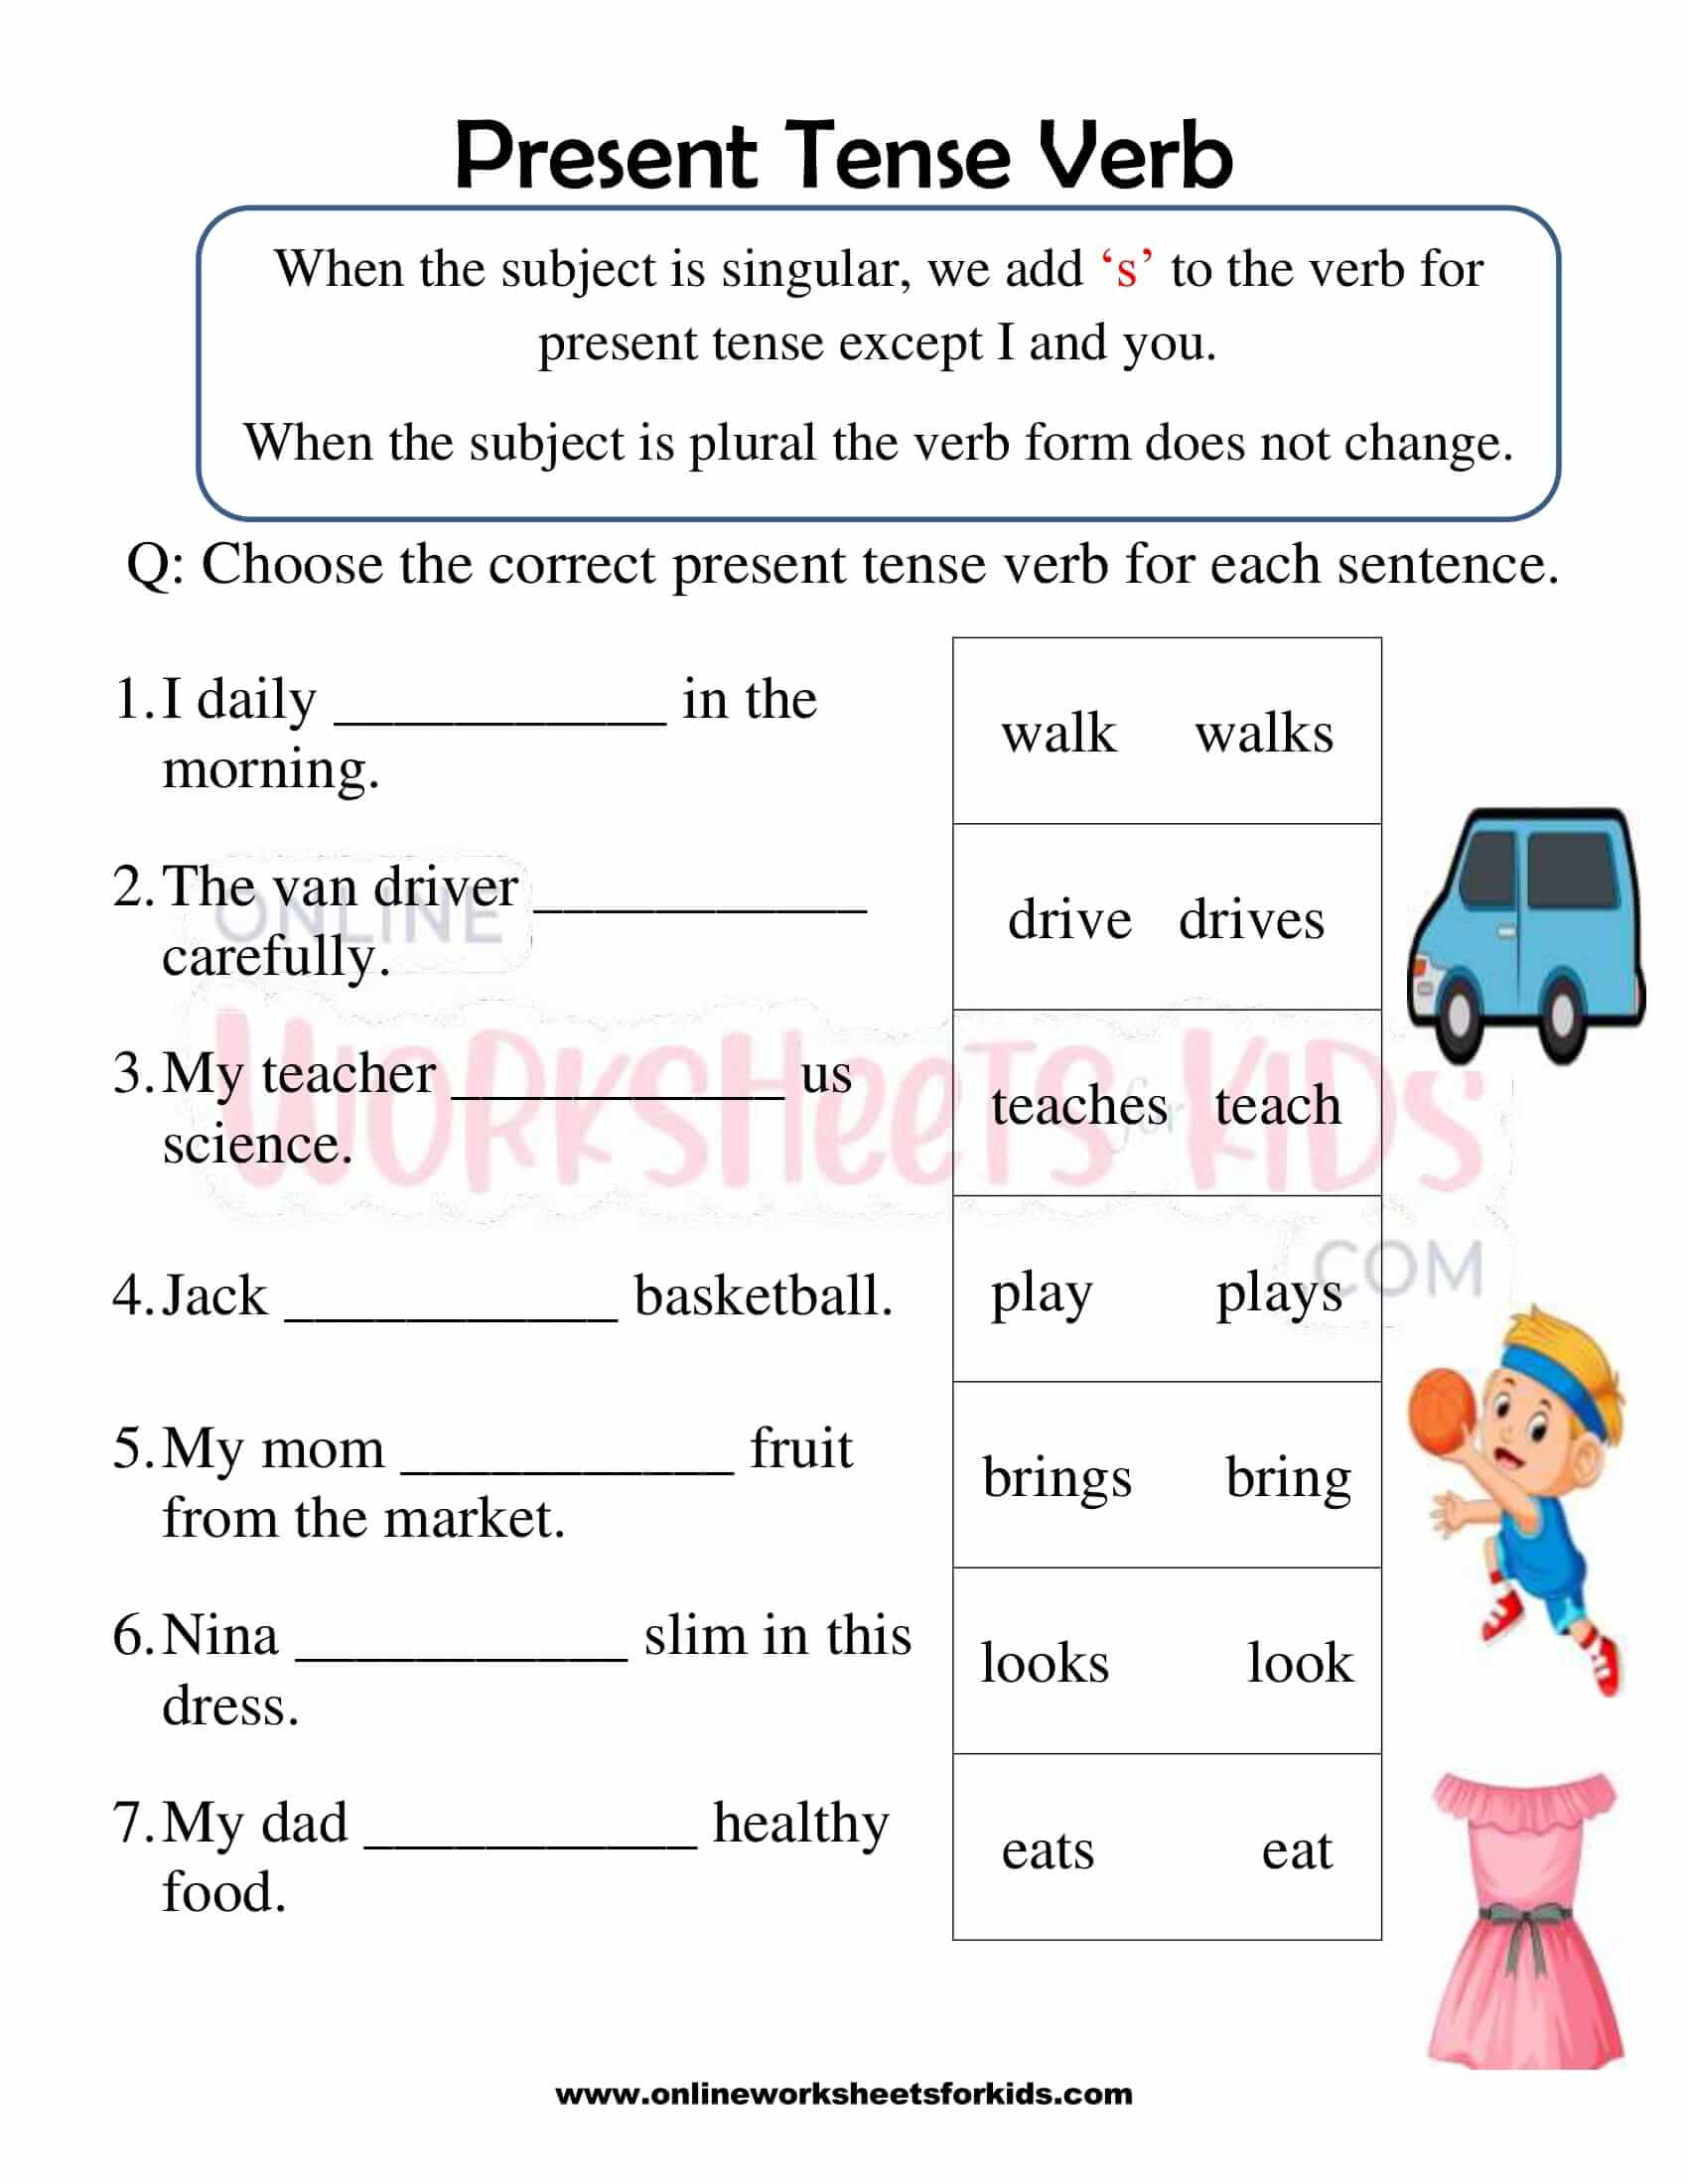 present-tense-verb-worksheet-1st-grade-5